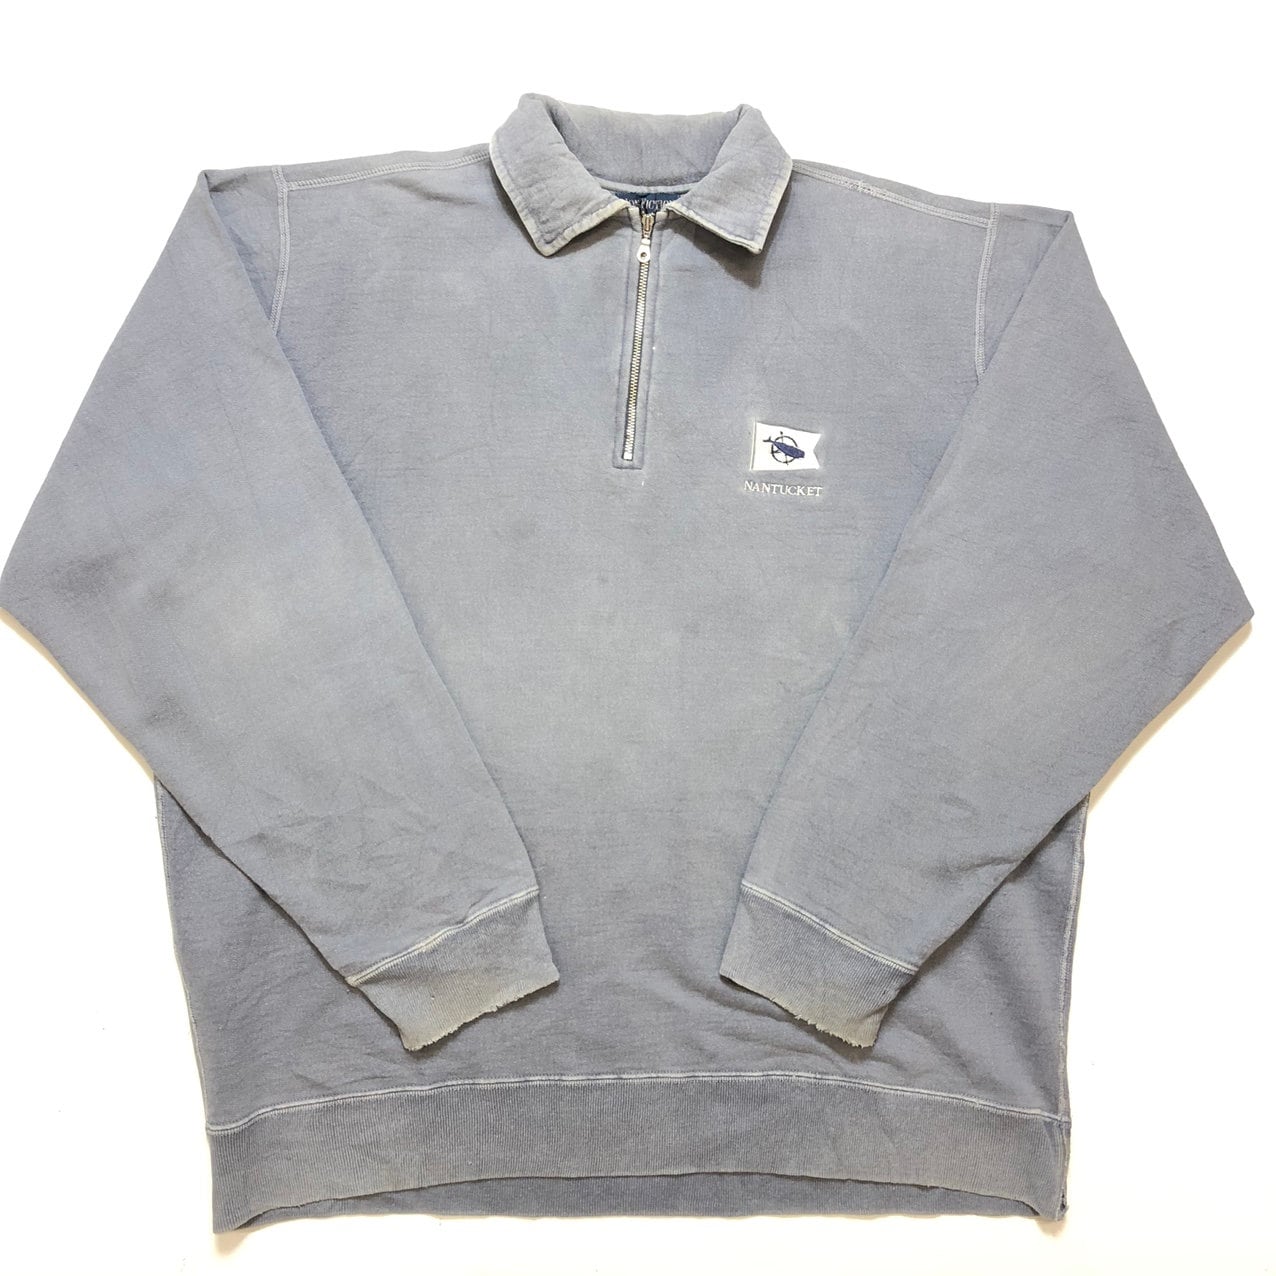 Grey nantucket vintage sweatshirt | Etsy